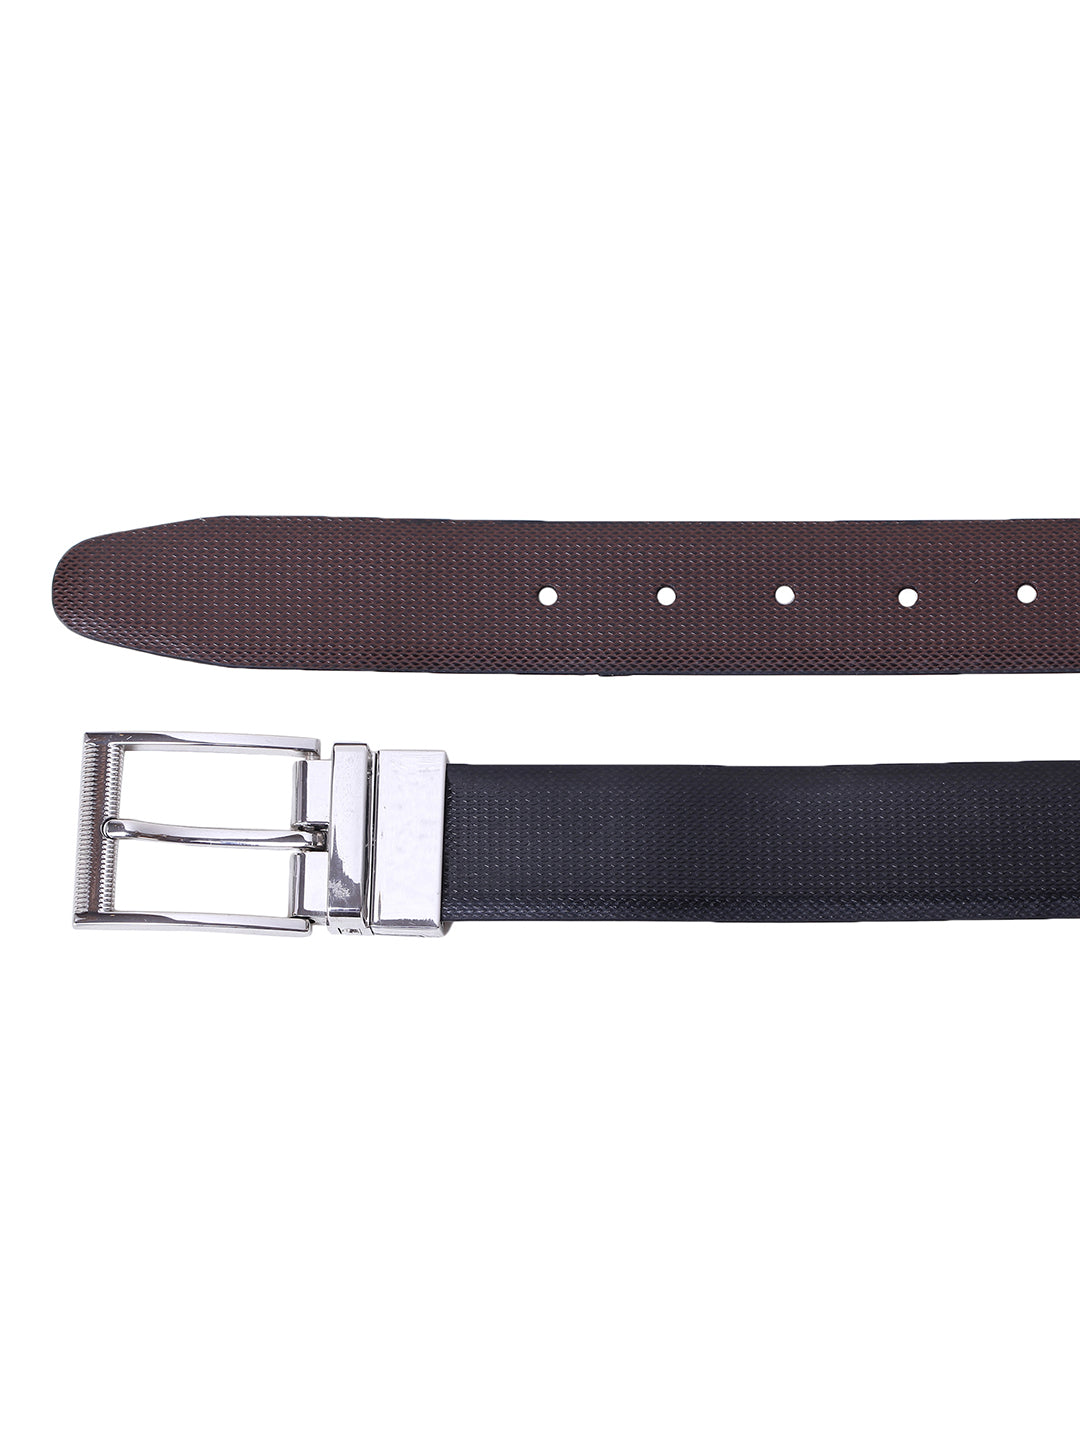 Alvaro Castagnino Men's Black Color Reversible Leather Belt